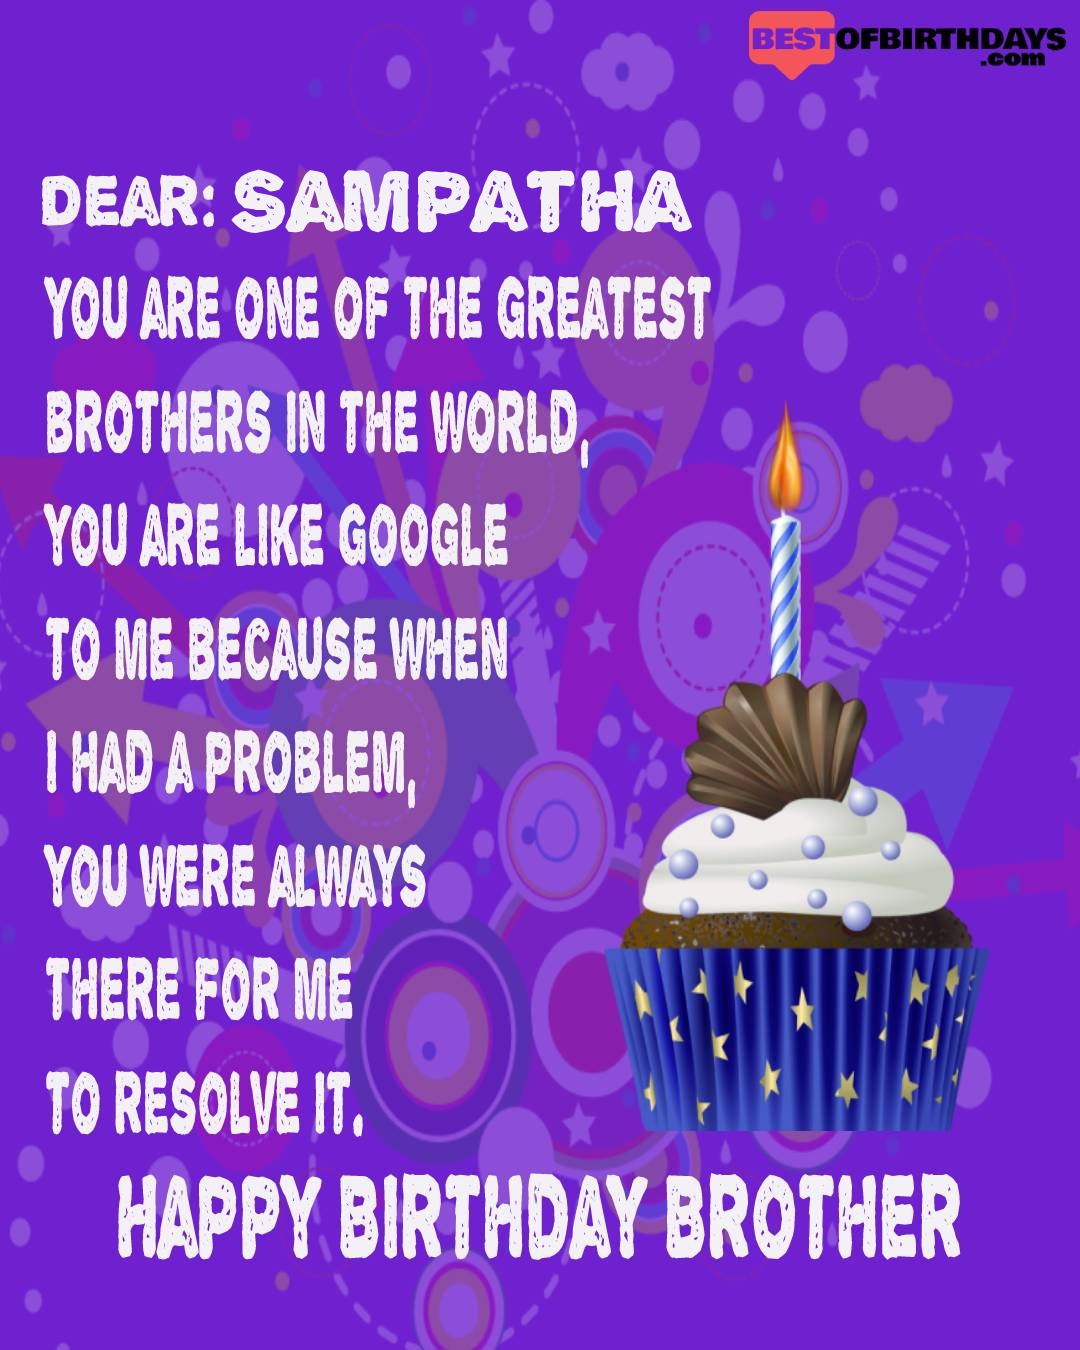 Happy birthday sampatha bhai brother bro